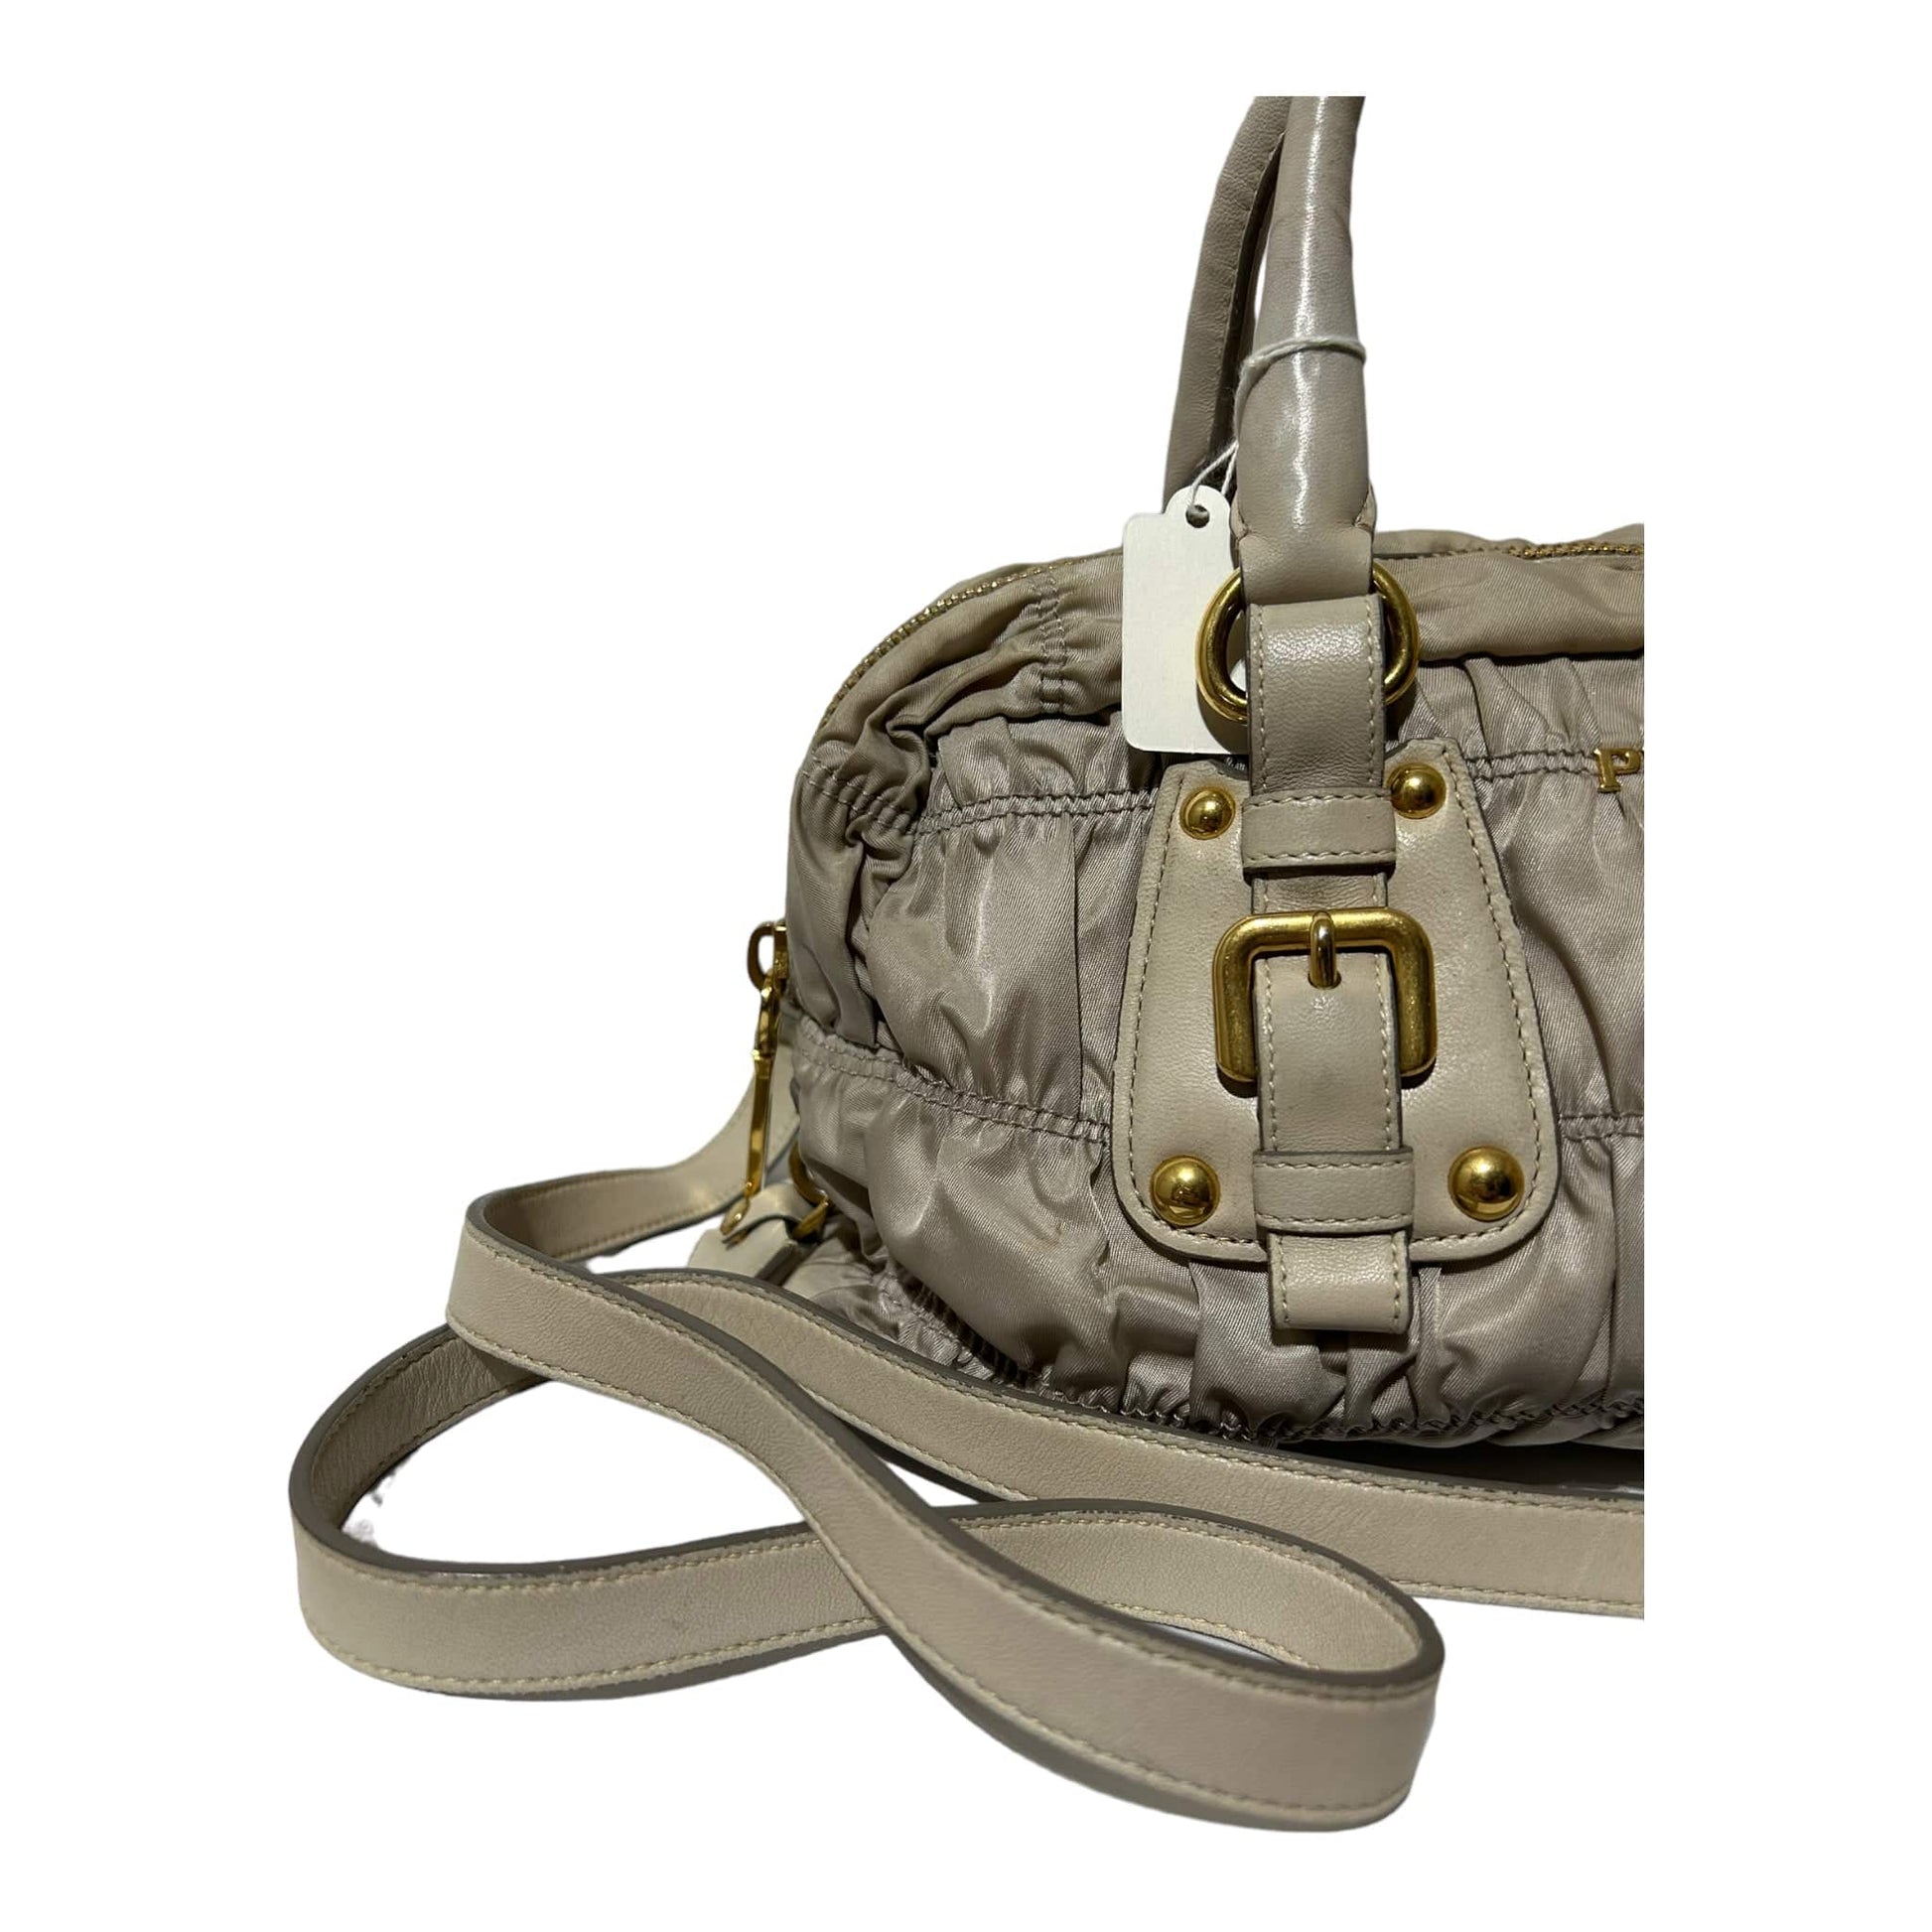 Prada Tessuto Gaufre Handbag - Recurring.Life